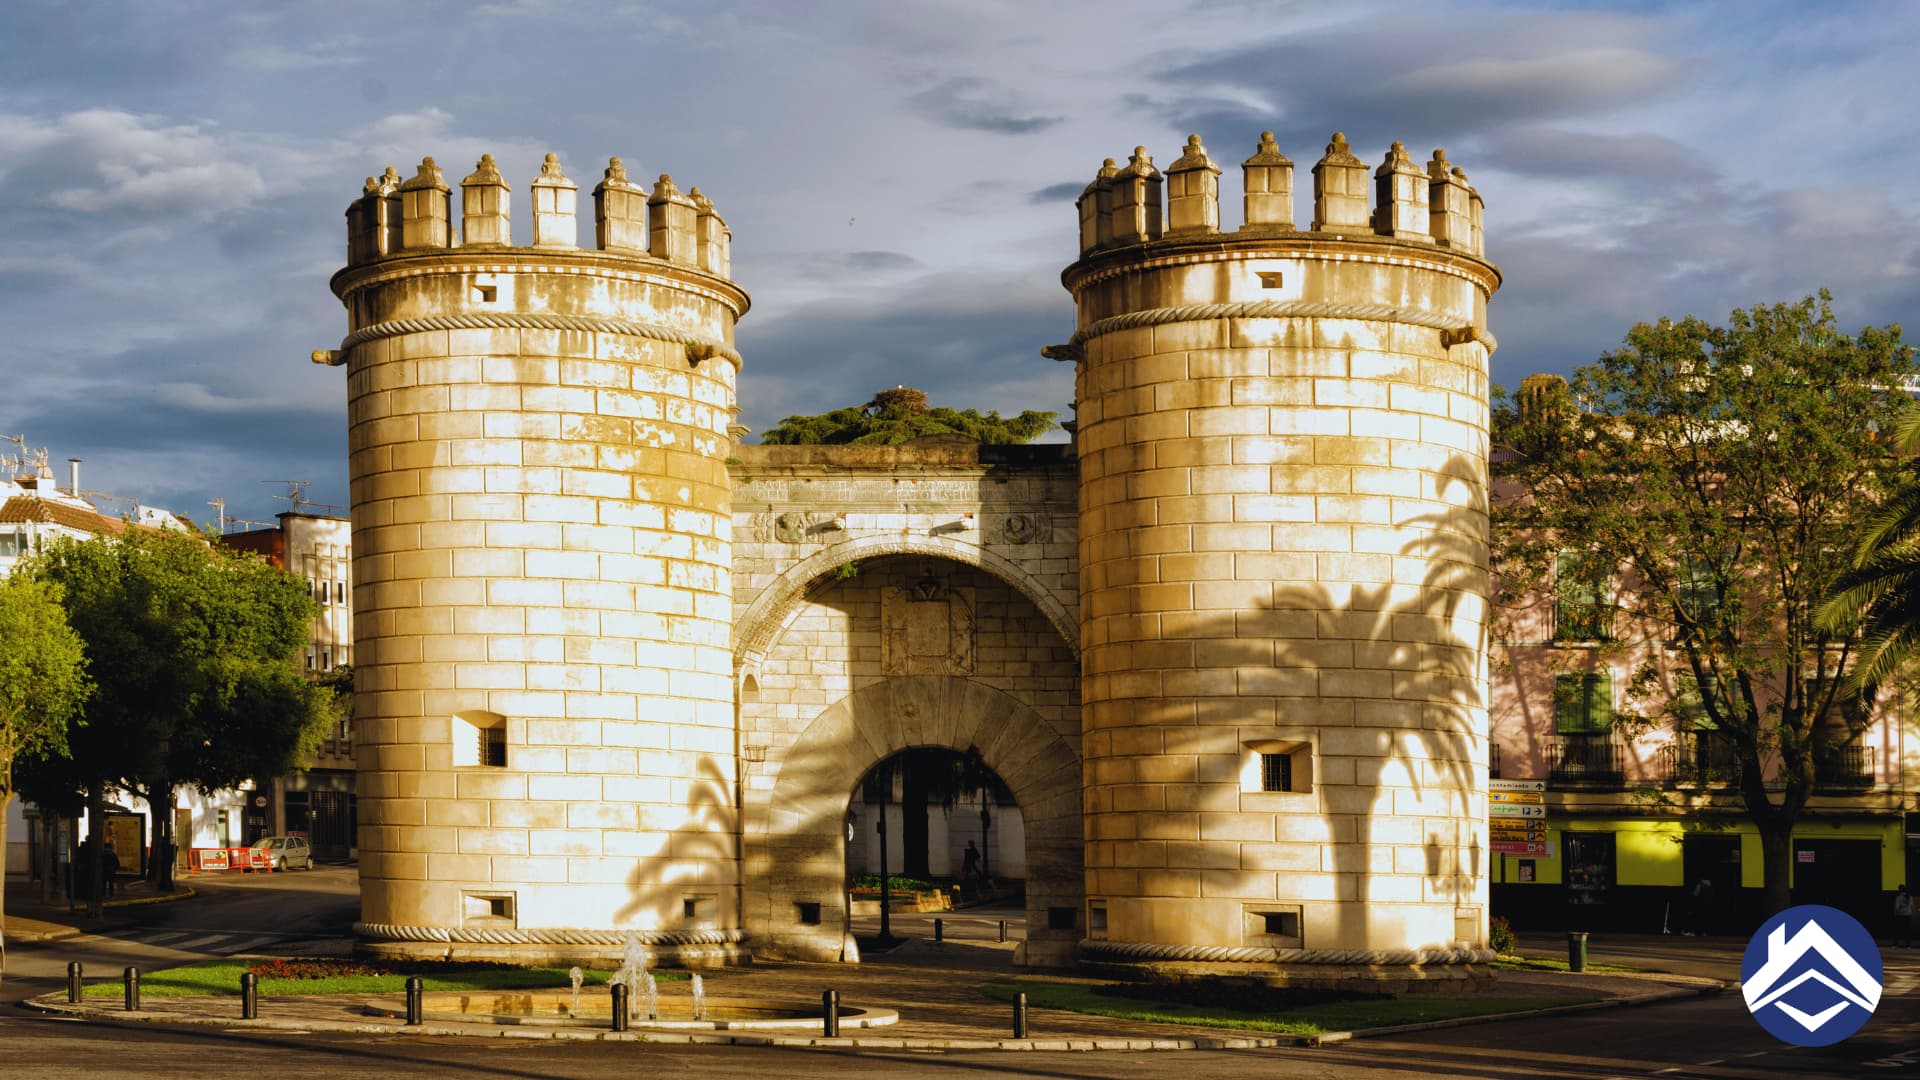 Puerta de Palmas - Badajoz